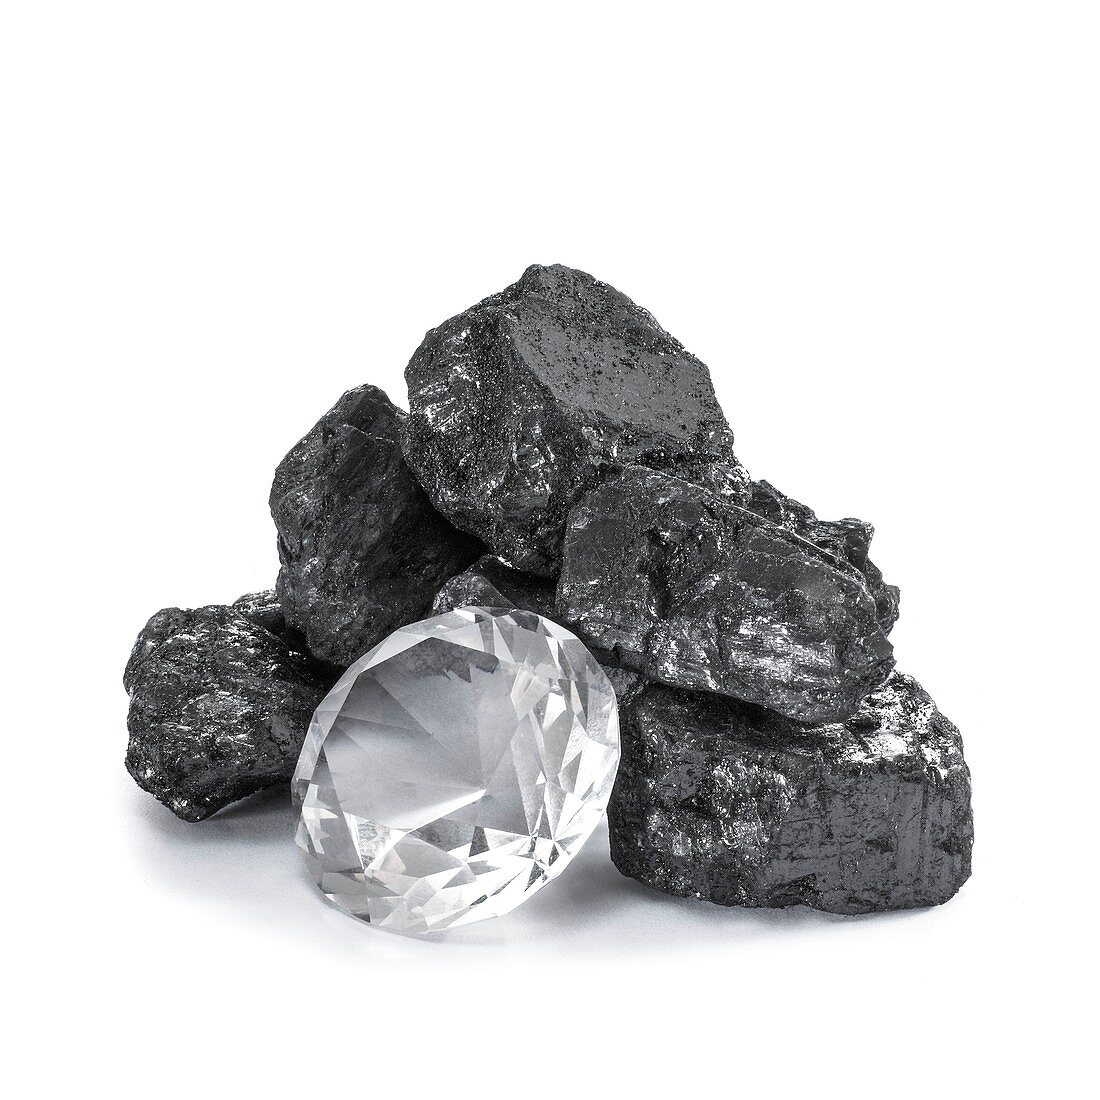 Anthracite and diamond